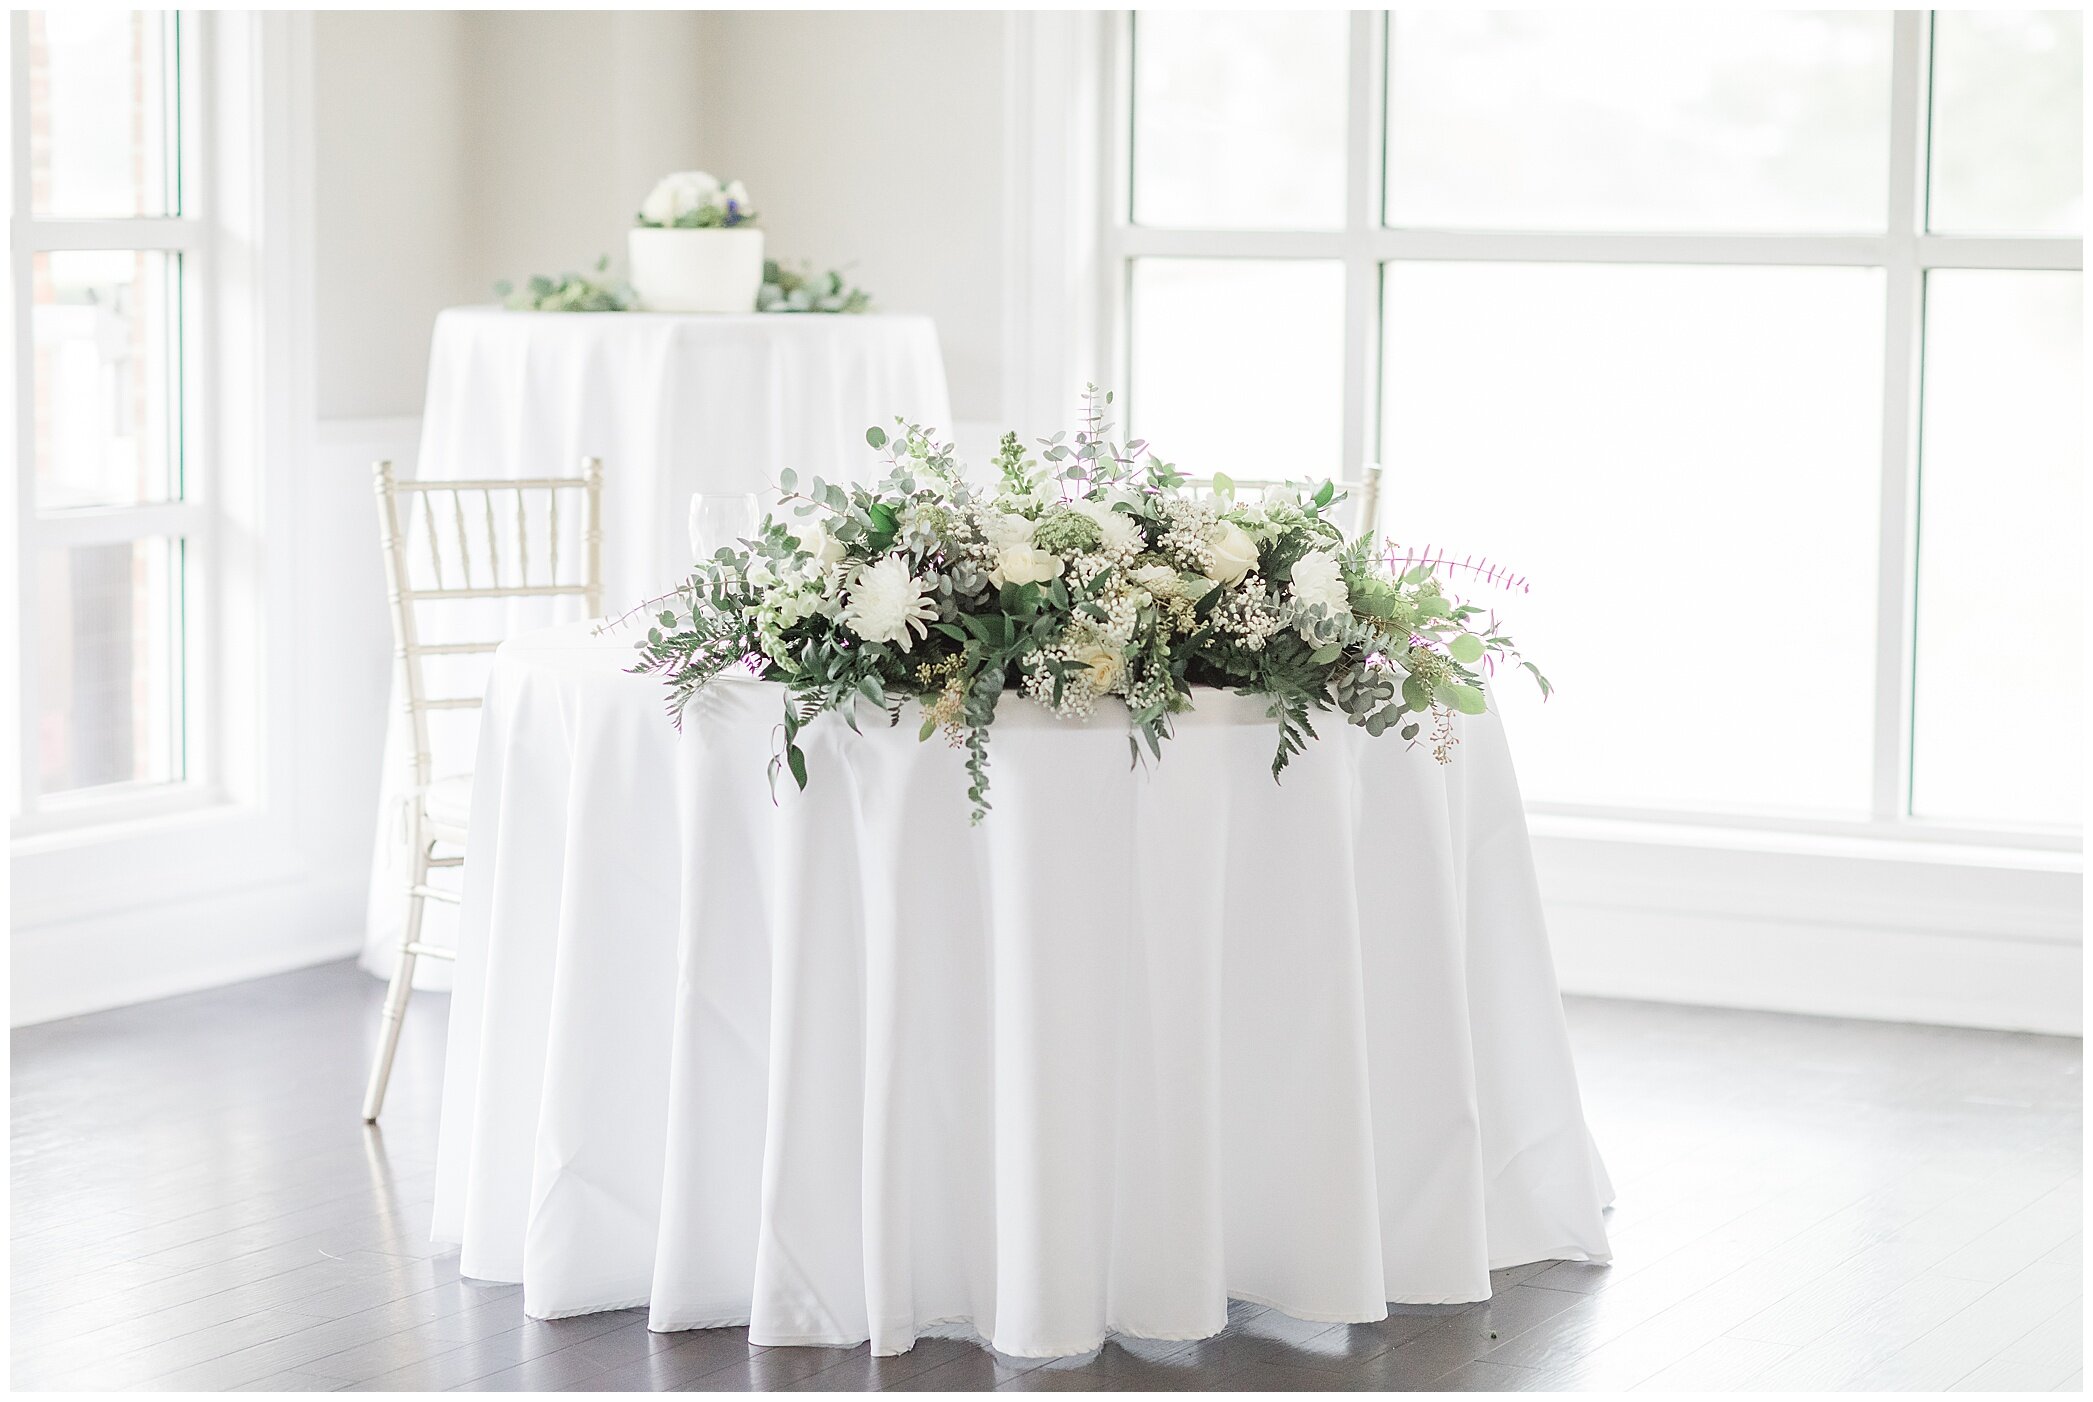 sweetheart table for Newport News wedding reception